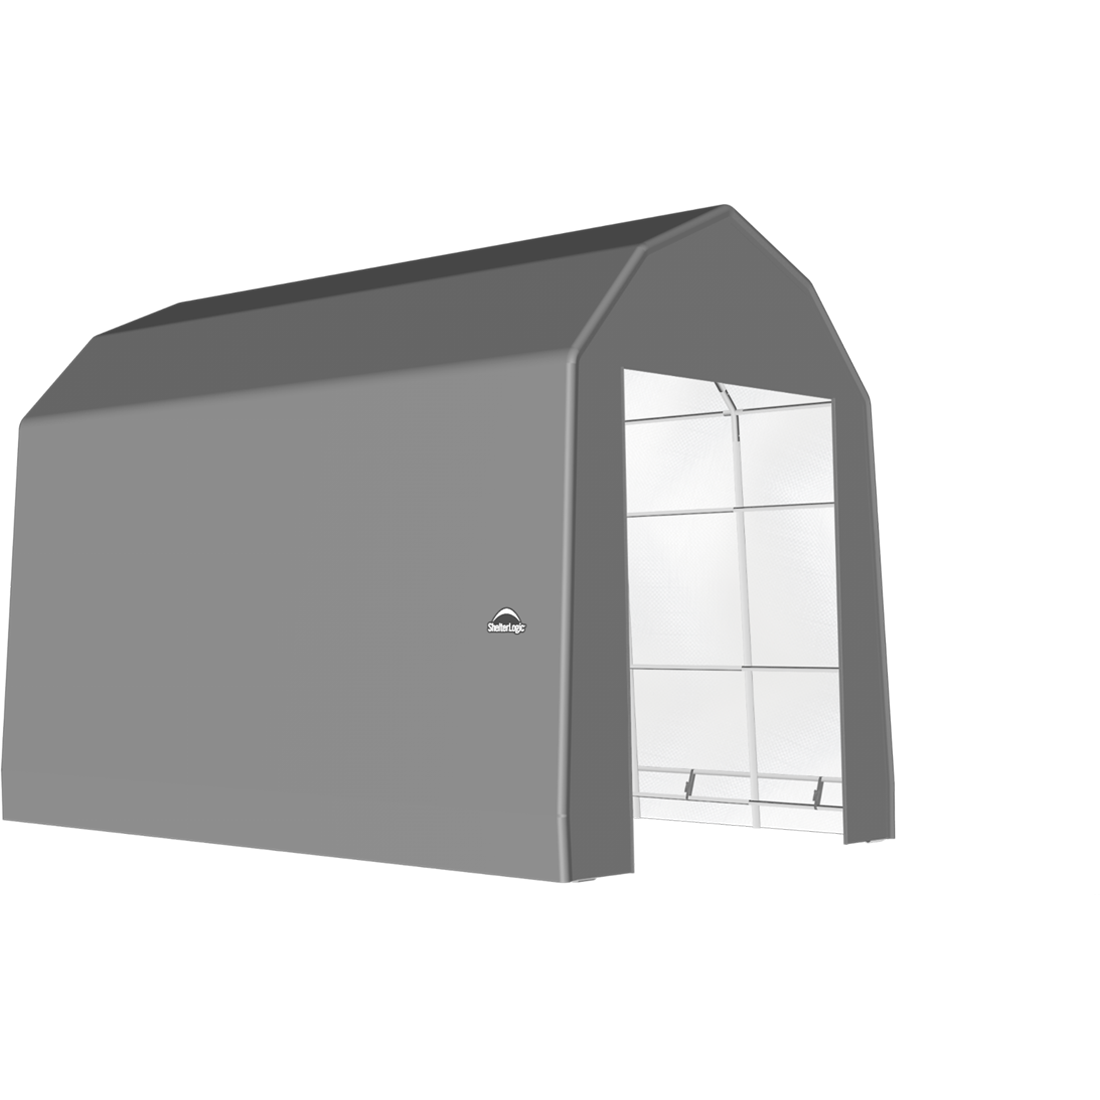 ShelterTech SP Series Barn Shelter, 15 ft. x 20 ft. x 17 ft. Heavy Duty PVC 14.5 oz. Gray